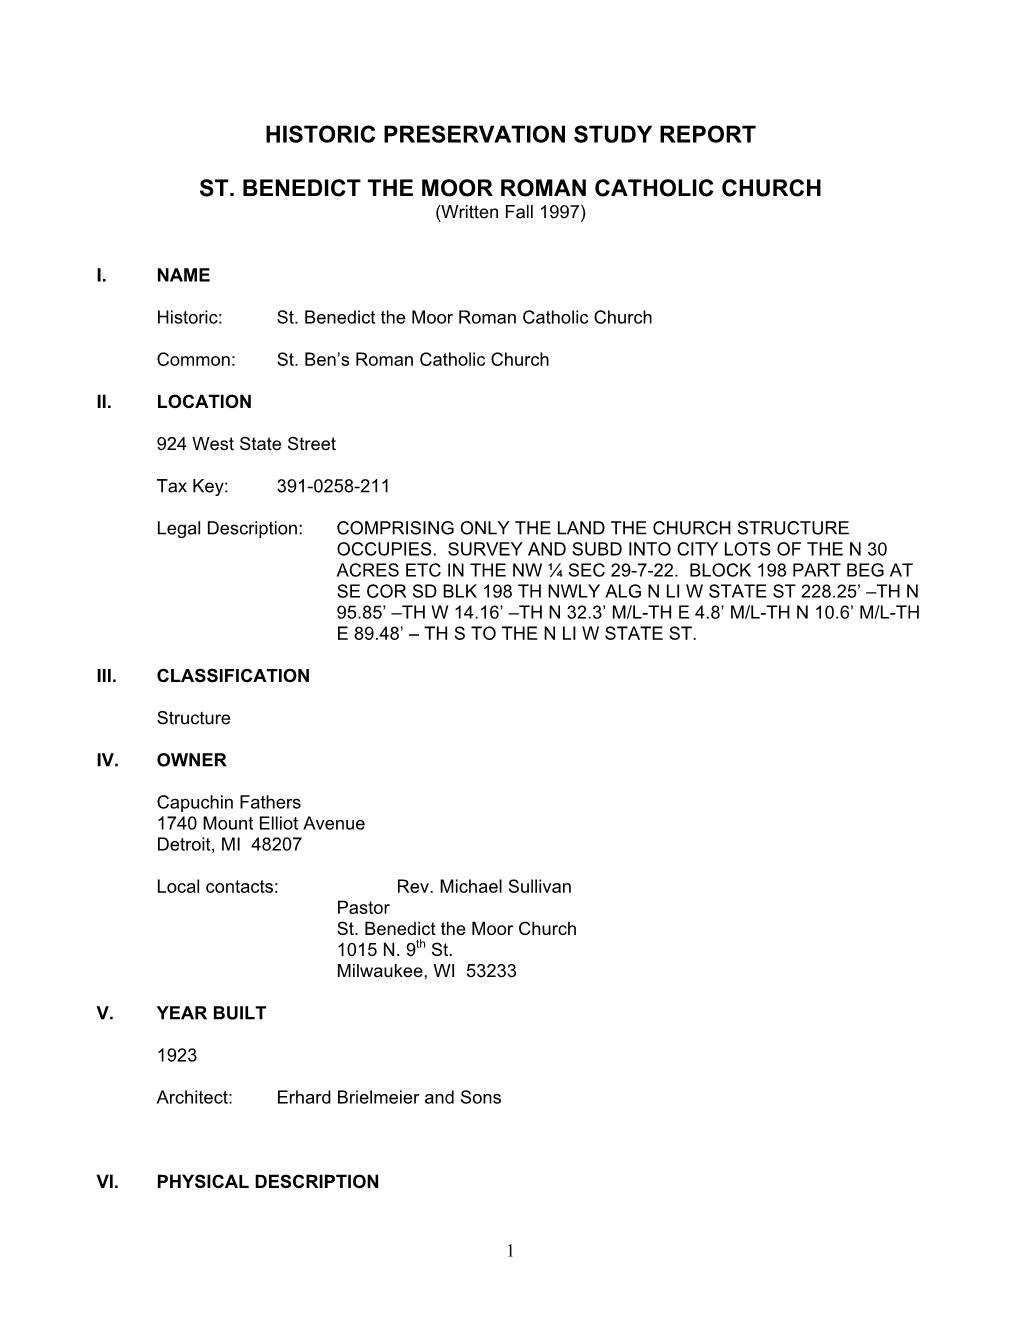 Historic Preservation Study Report St. Benedict the Moor Roman Catholic